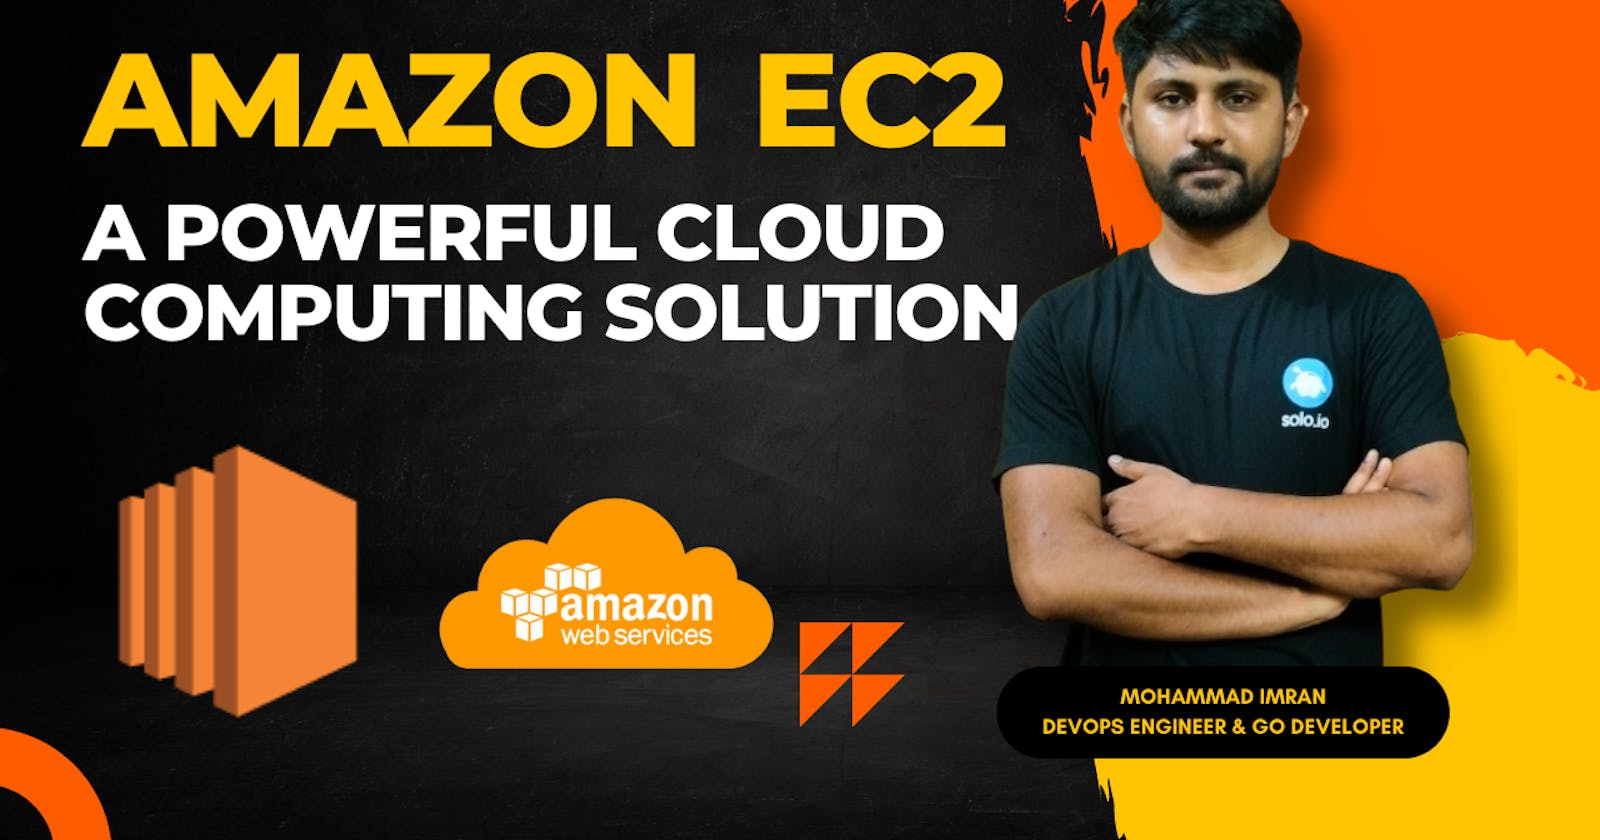 Amazon EC2: A Powerful Cloud Computing Solution